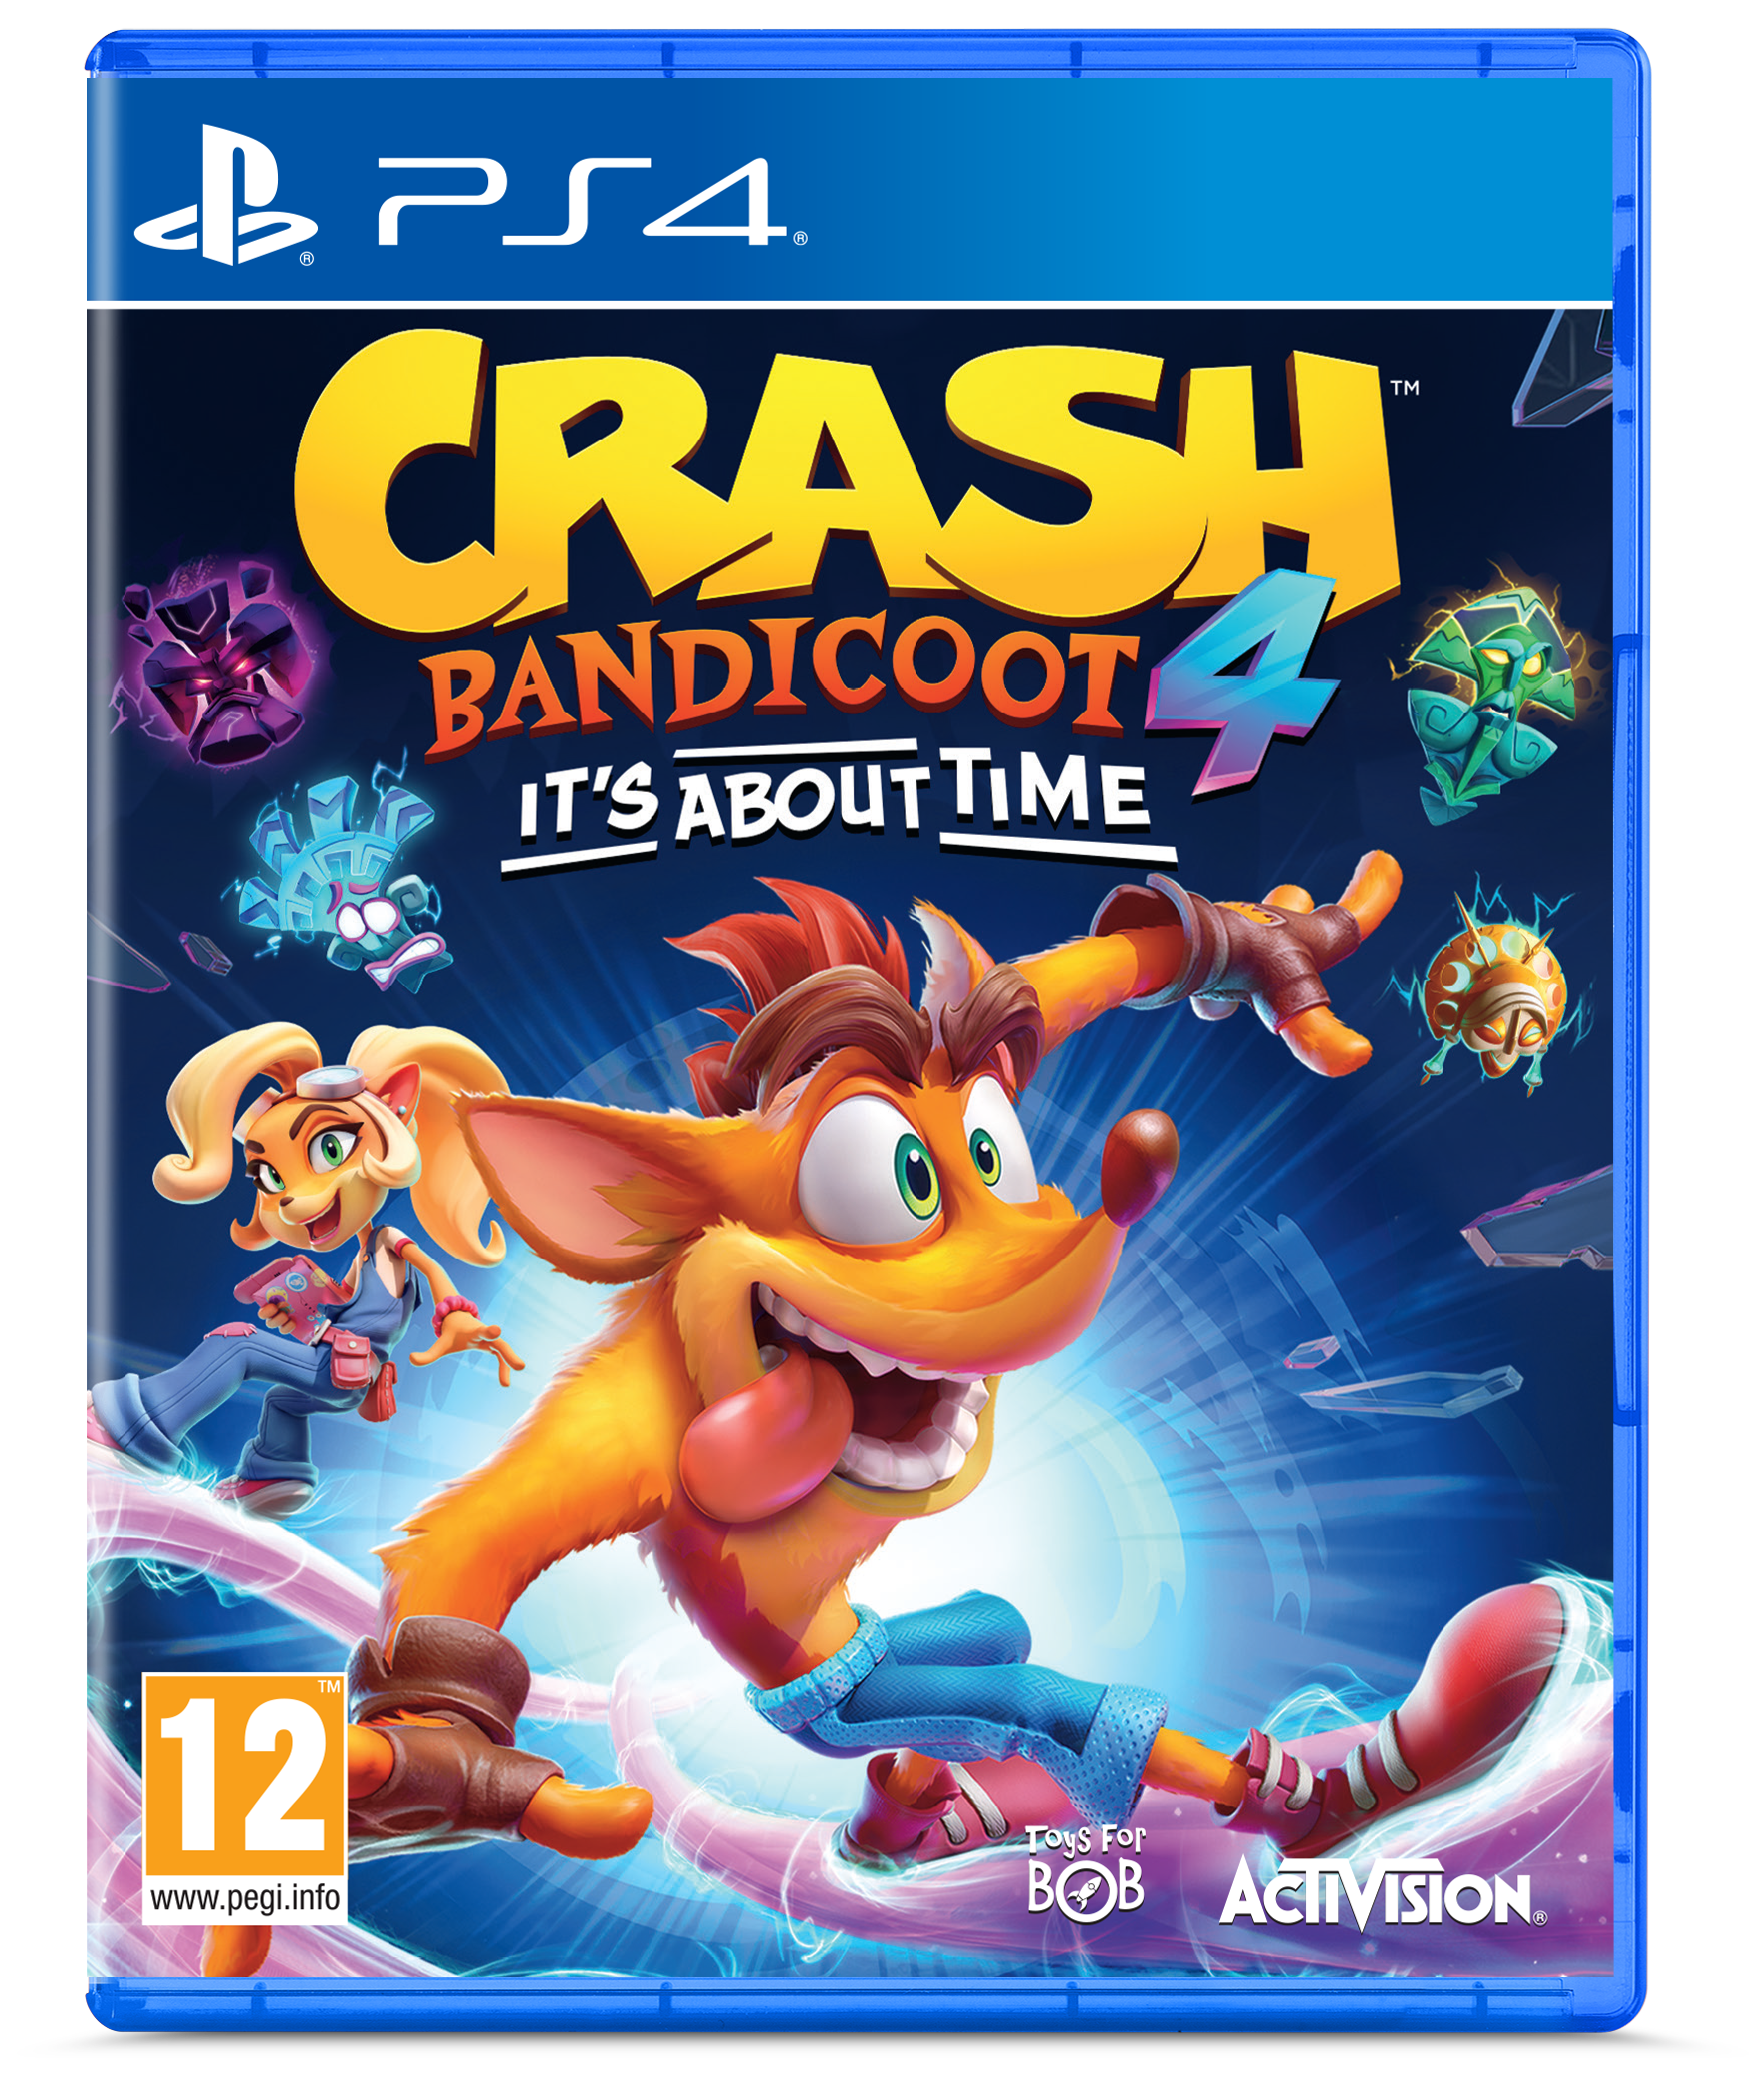 Crash Bandicoot 4: Itâs About Time